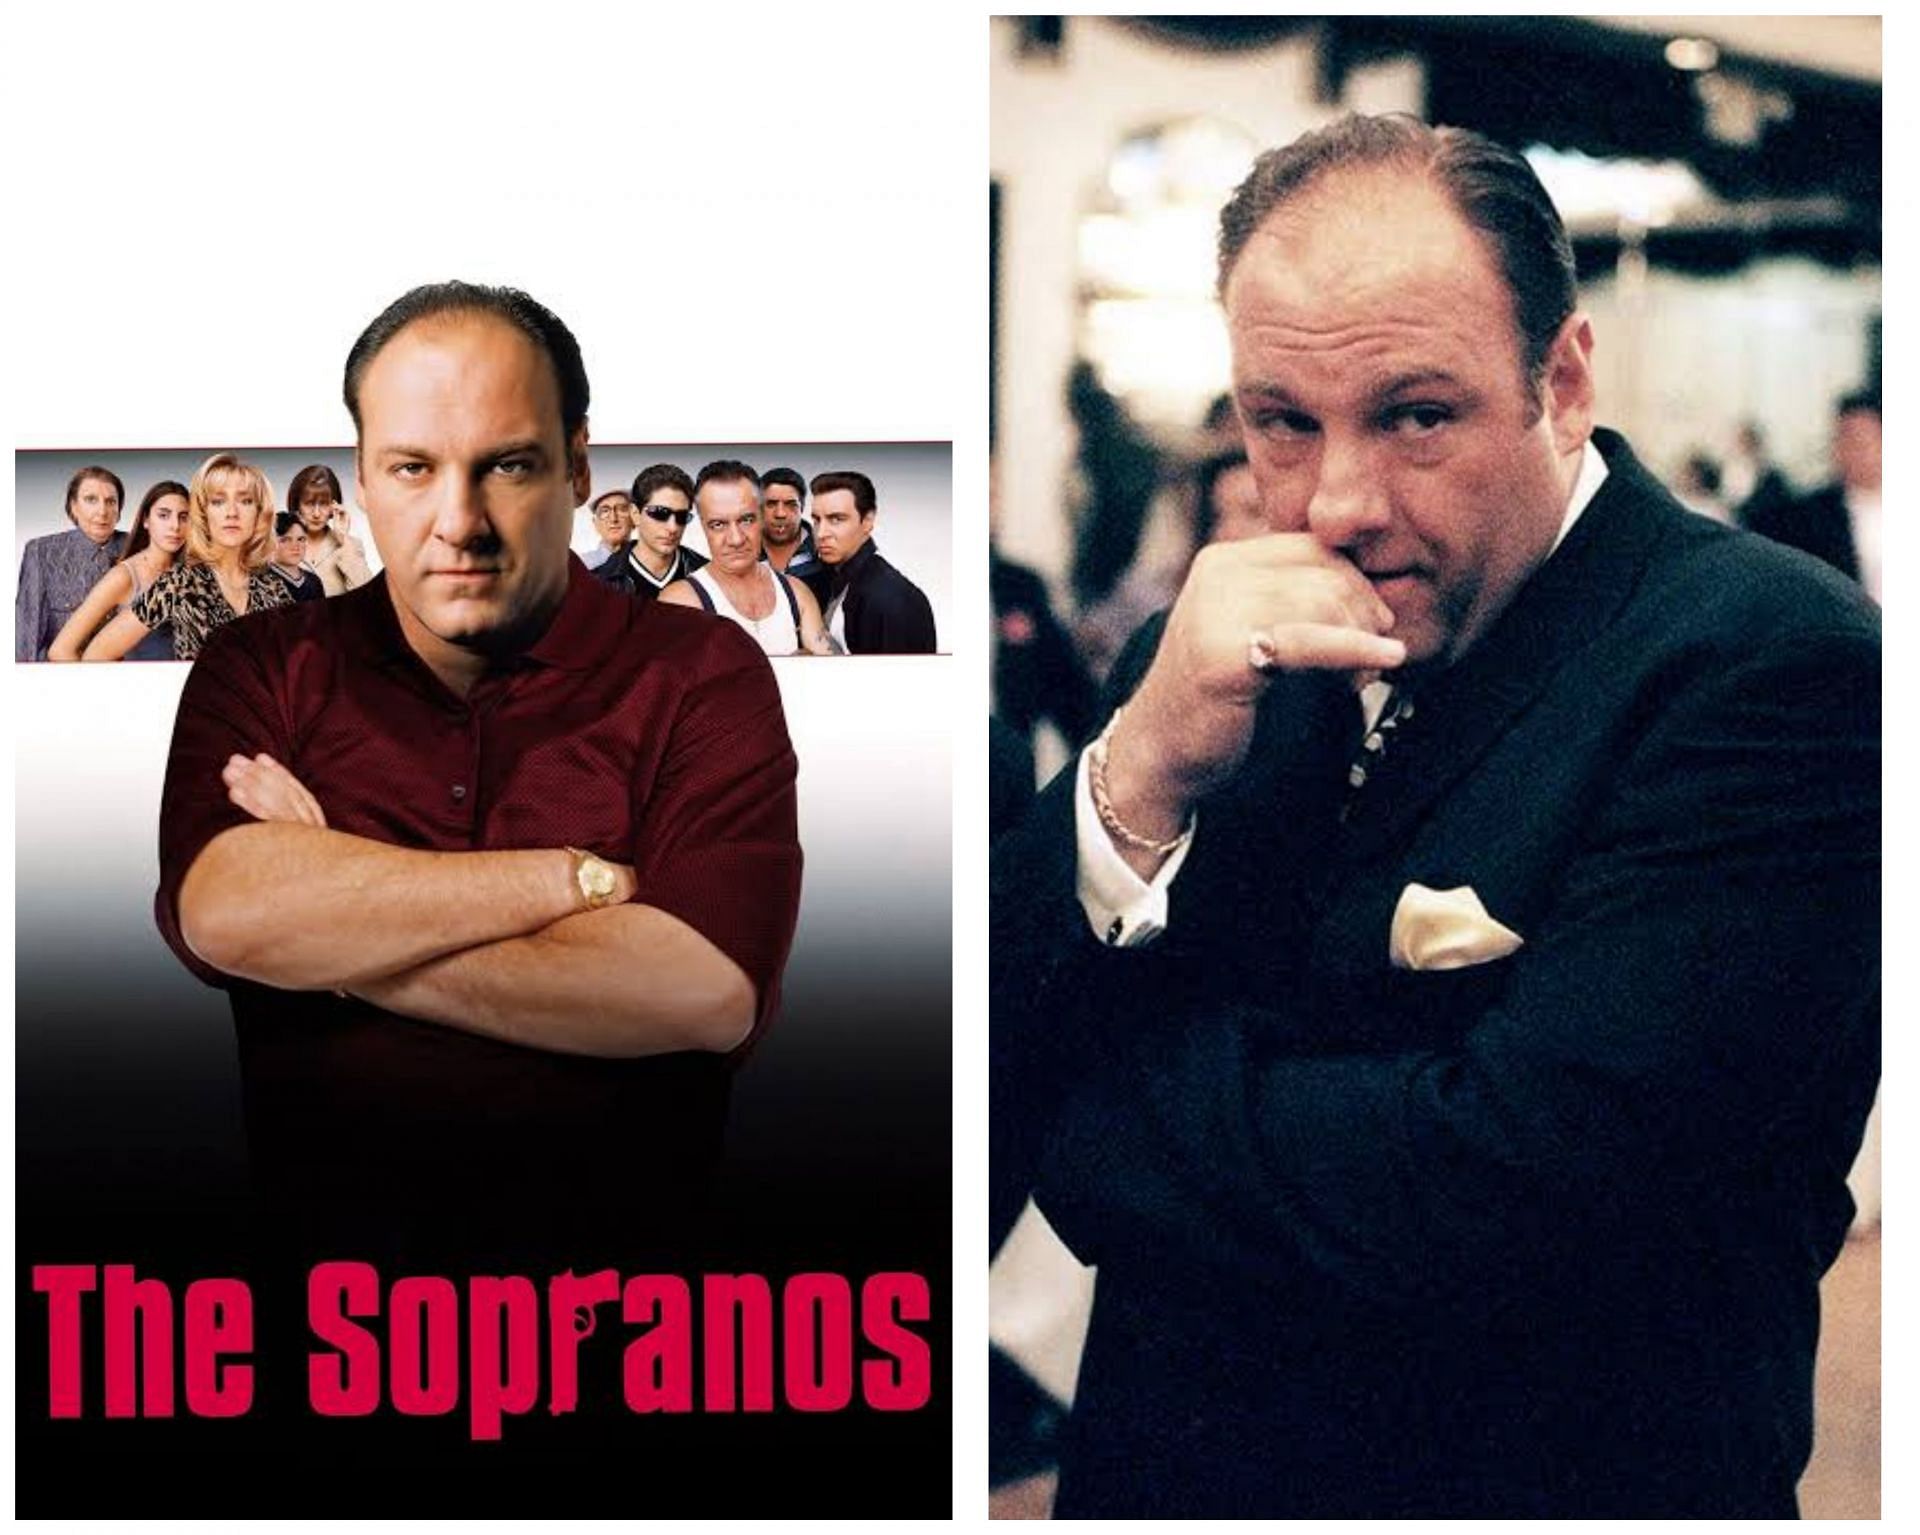 The Sopranos poster / A still of Tony Soprano (Images via HBO and IMDb)